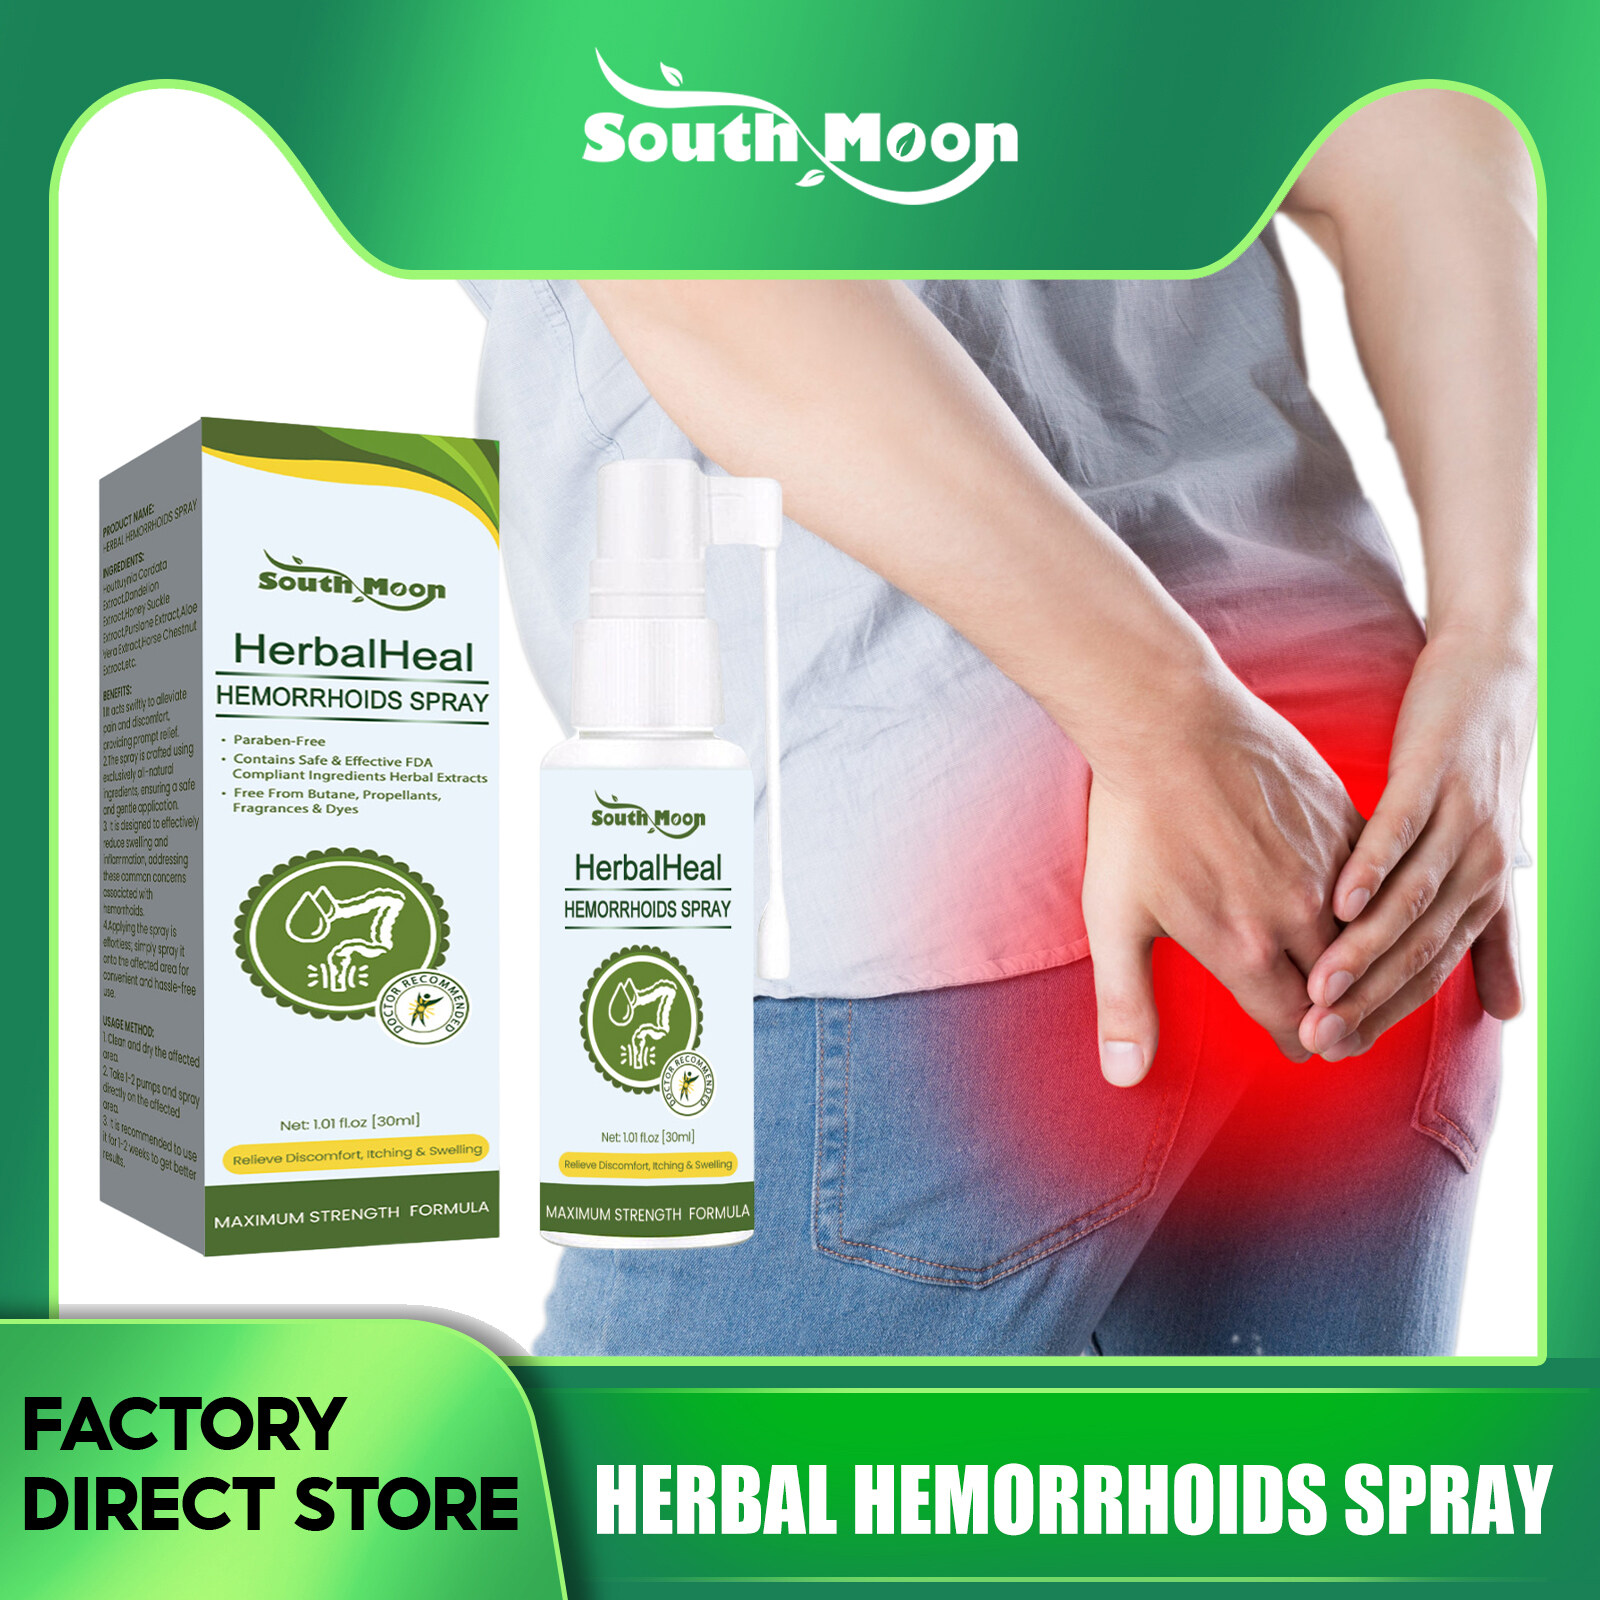 South Moon Herbal Hemorrhoids Spray Hemorrhoid Pain Treatment Spray Repair